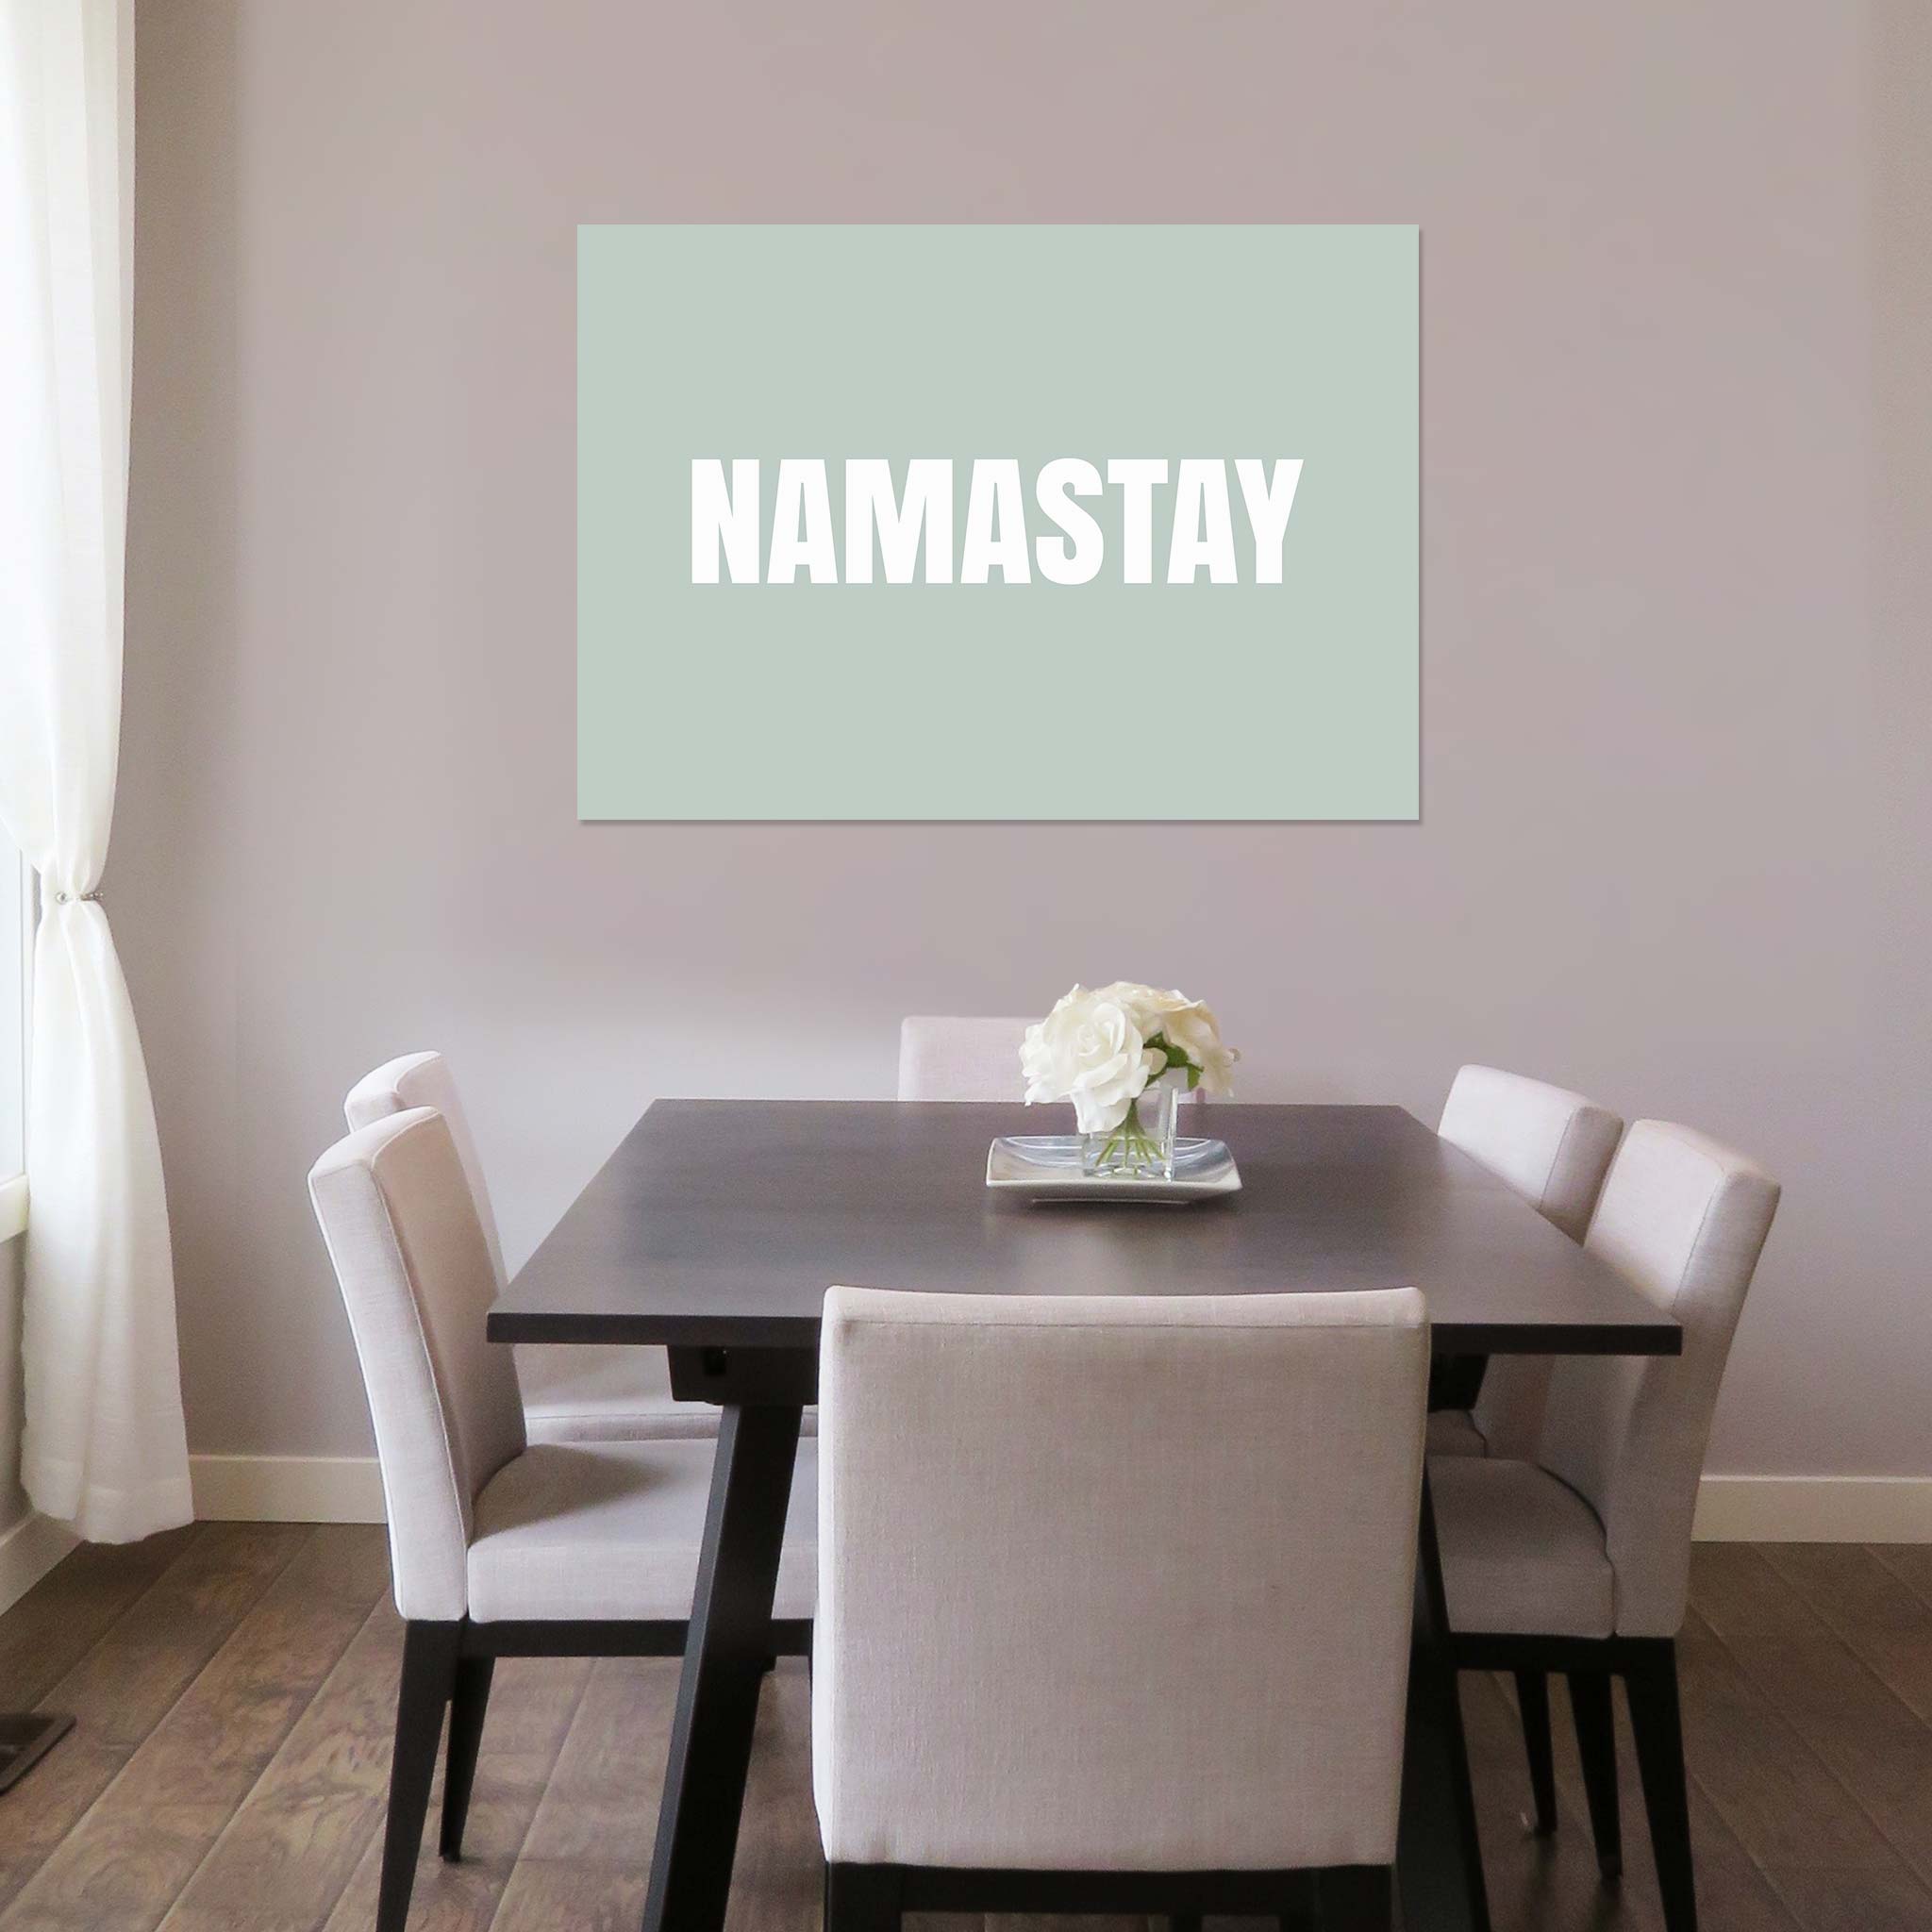 Namastay